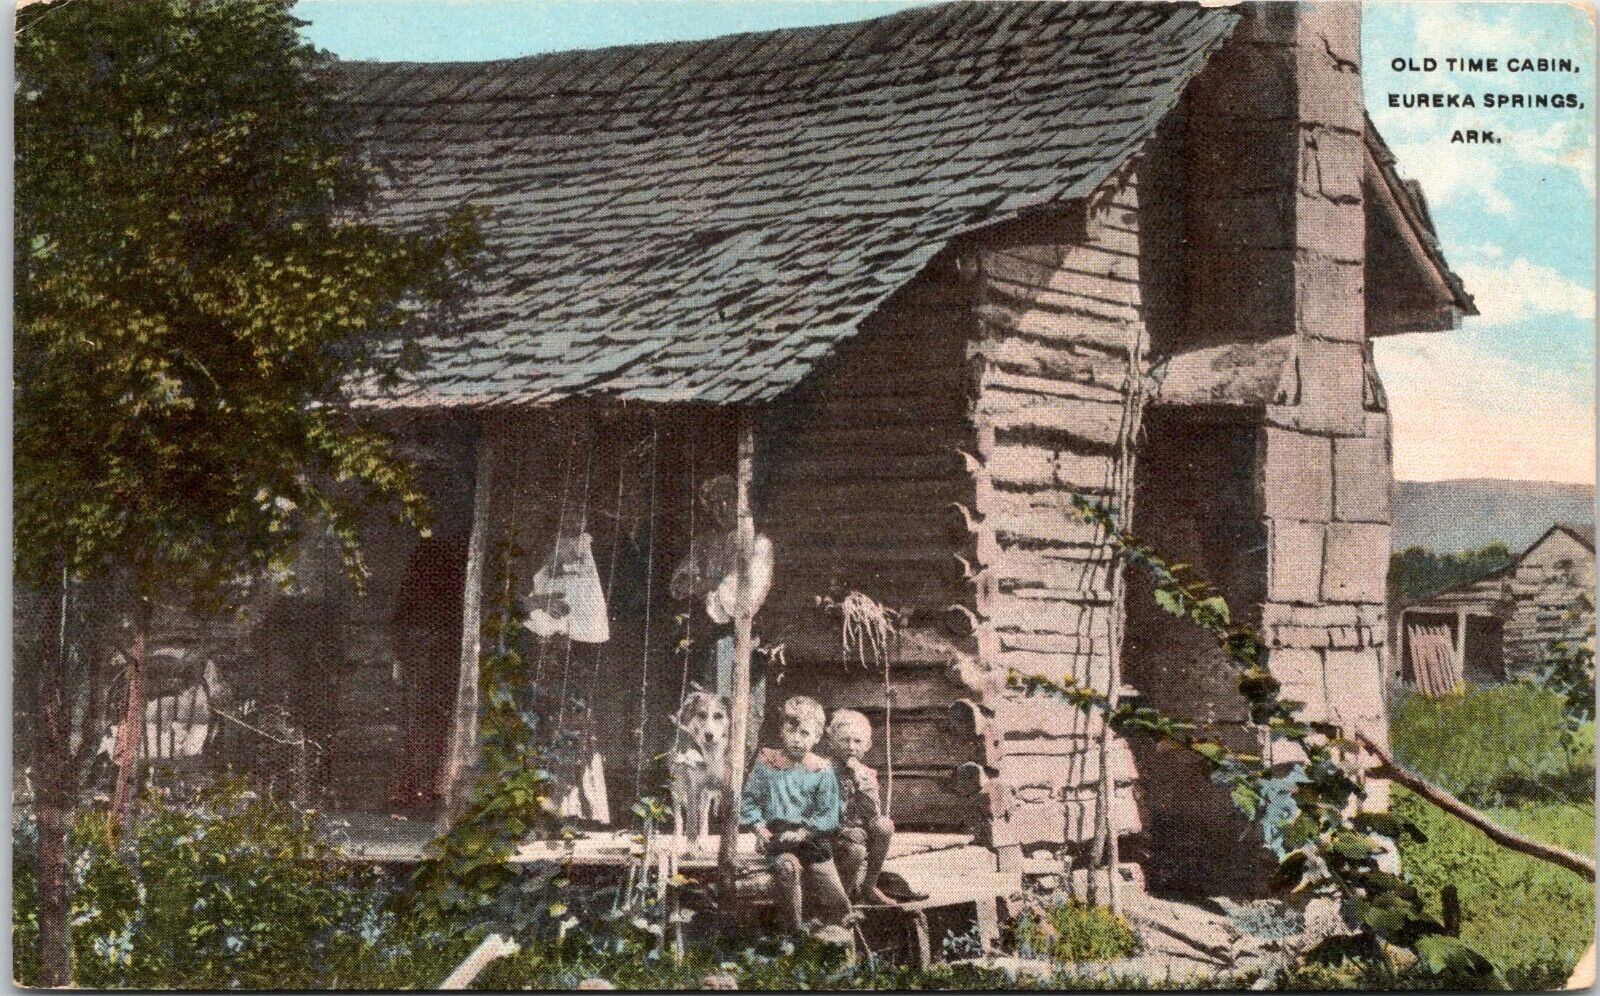 Children, Dog in Old Time Cabin Eureka Springs Arkansas- c1907-1915 d/b Postcard